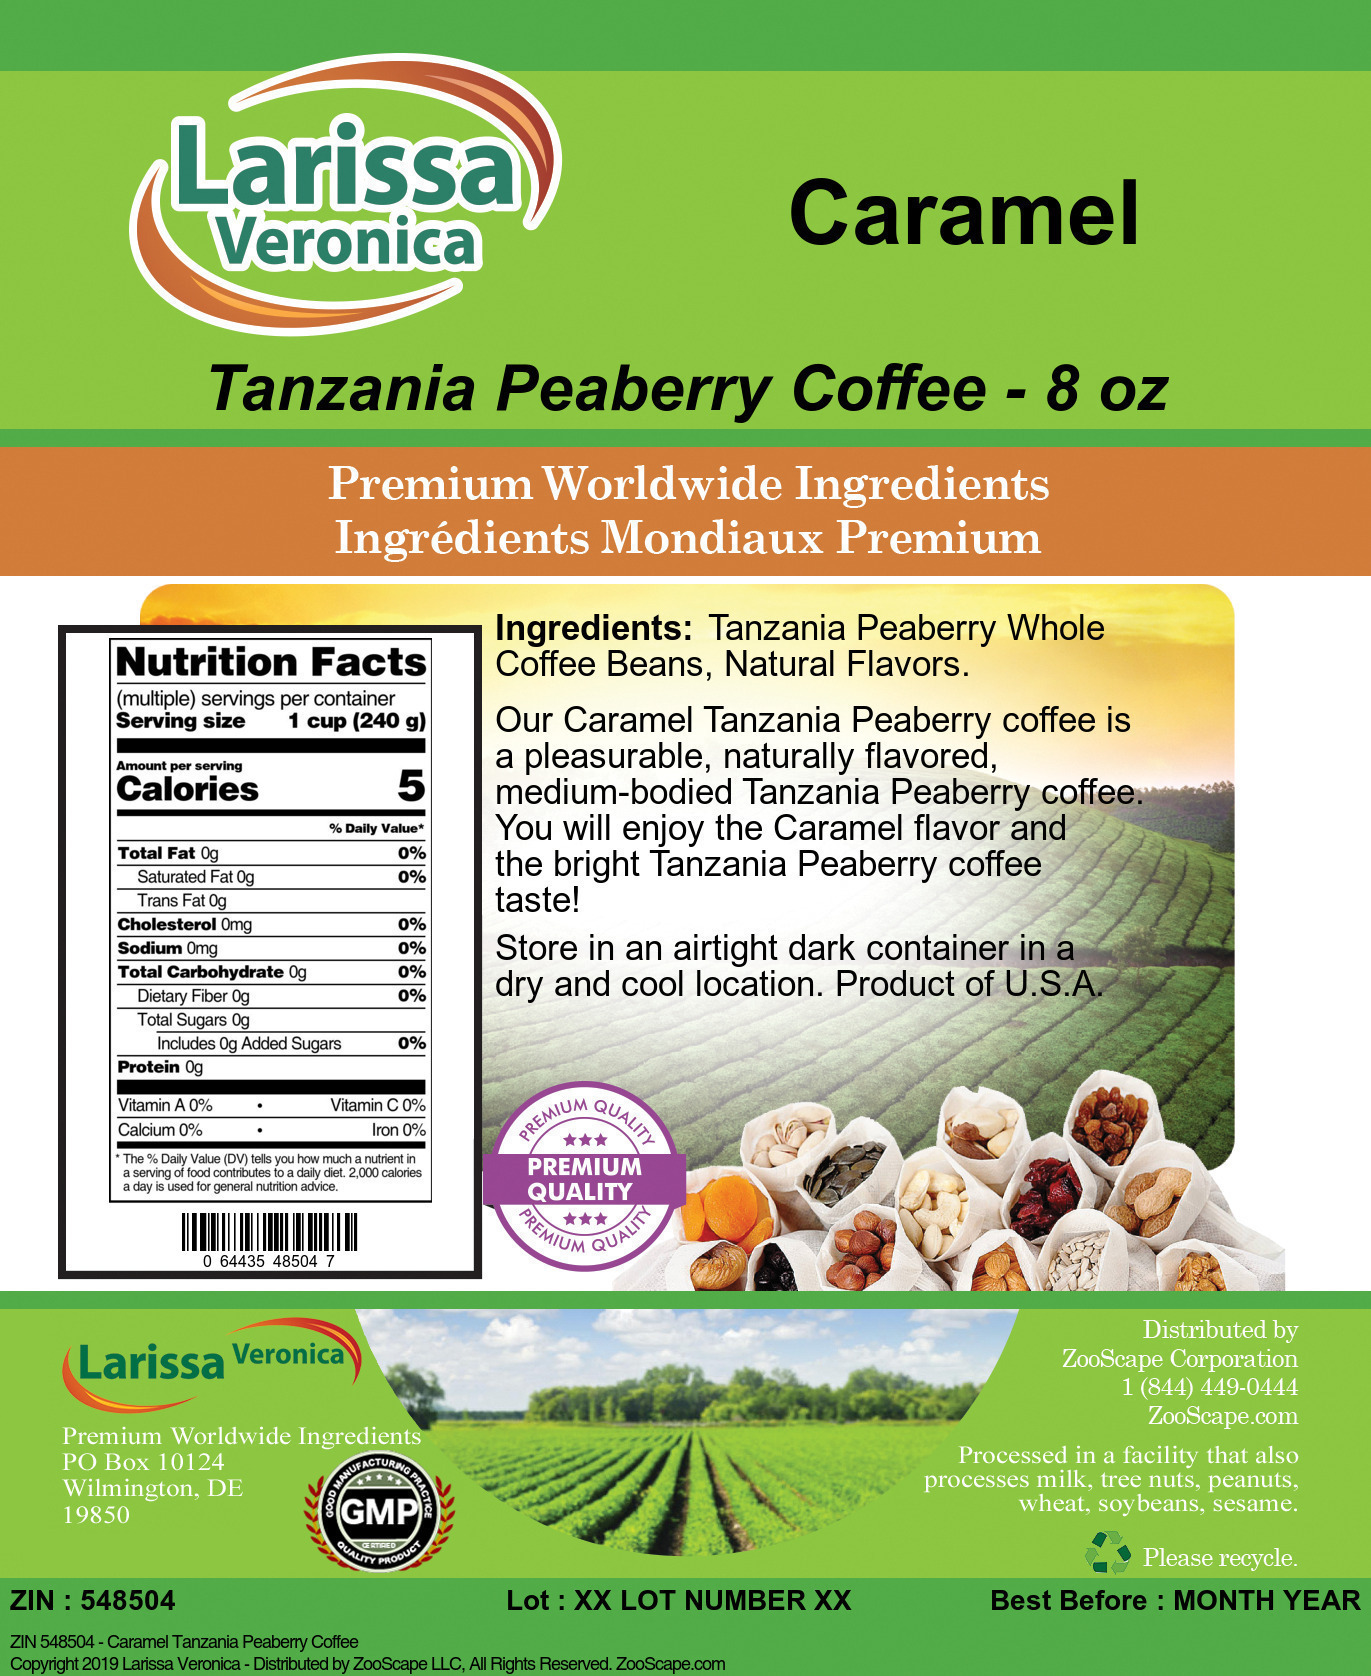 Caramel Tanzania Peaberry Coffee - Label